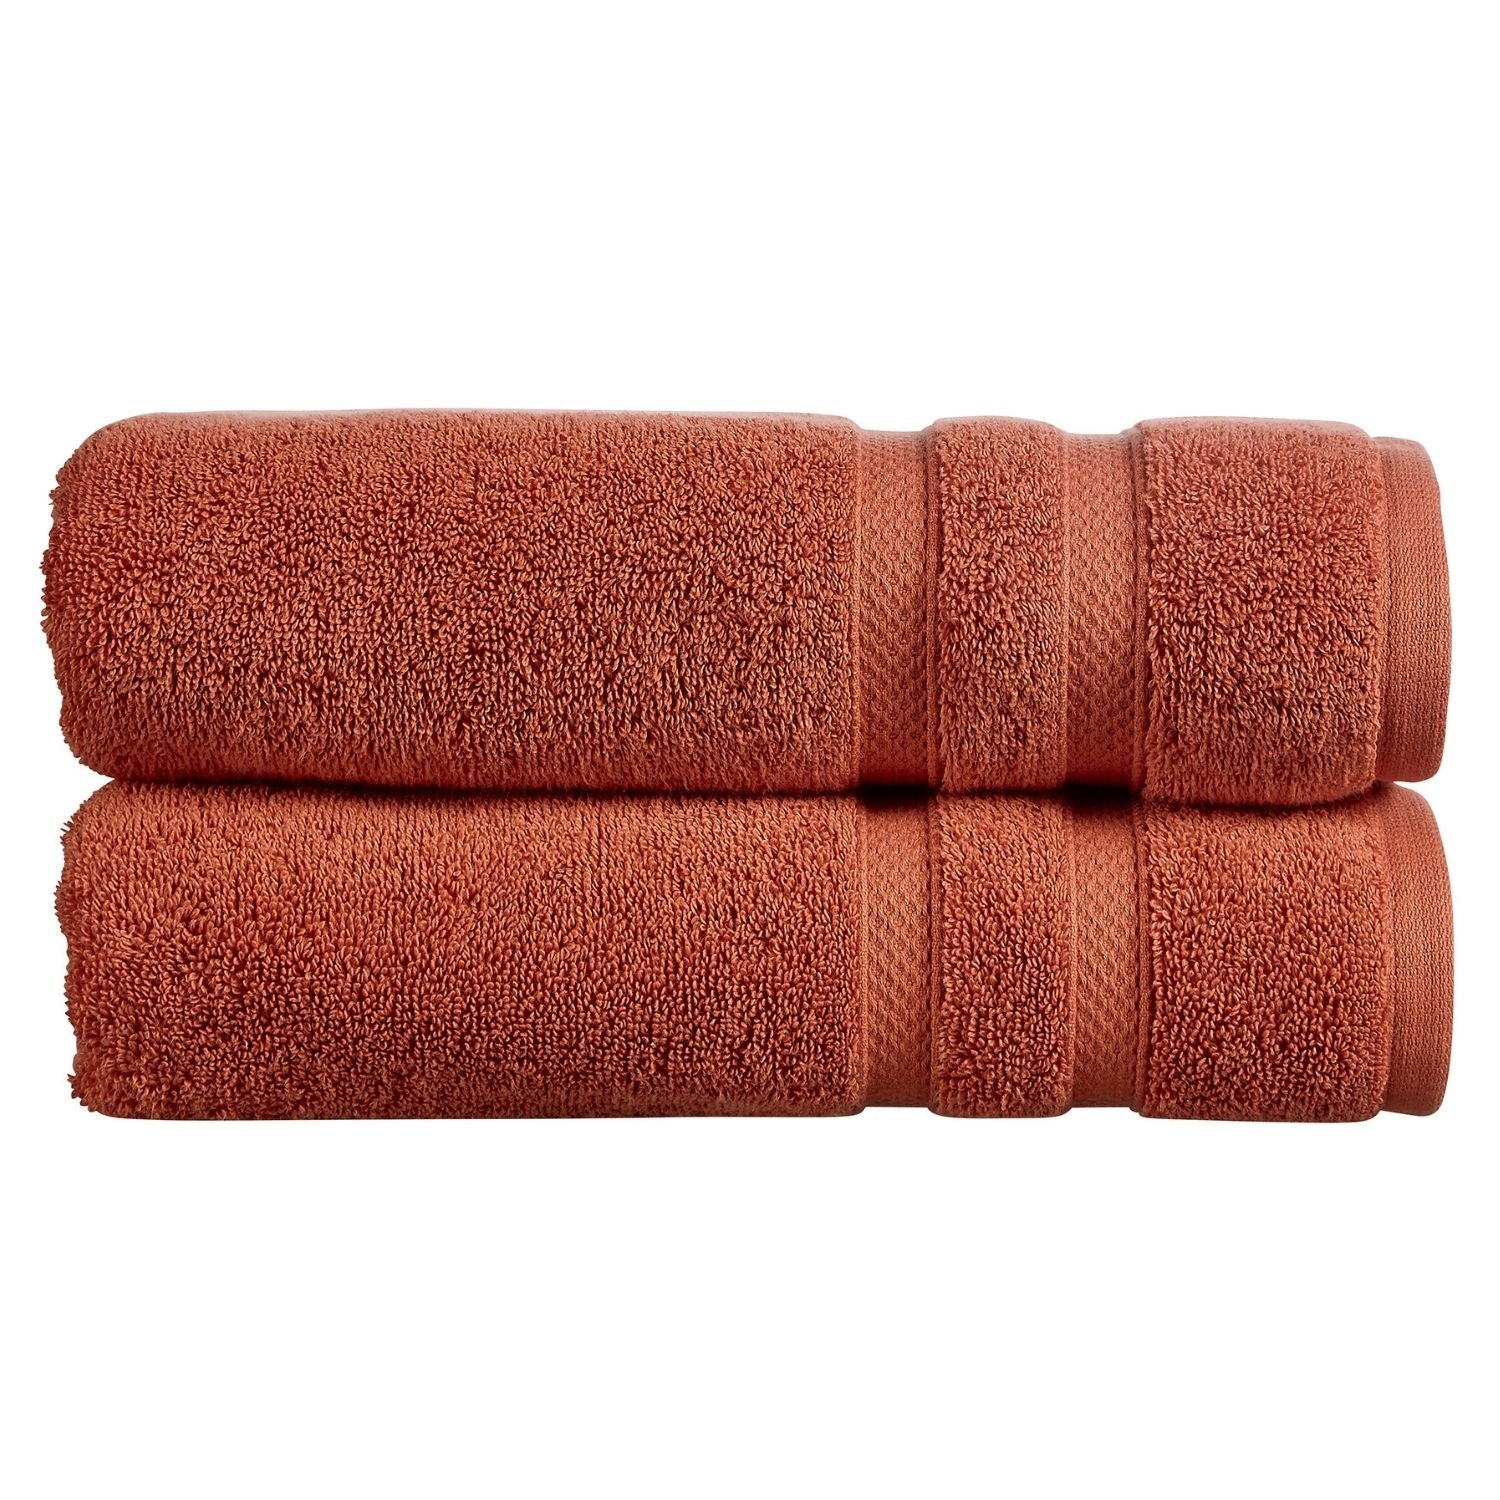 Christy Chroma Bath Towel - Burnt Sienna 1 Shaws Department Stores